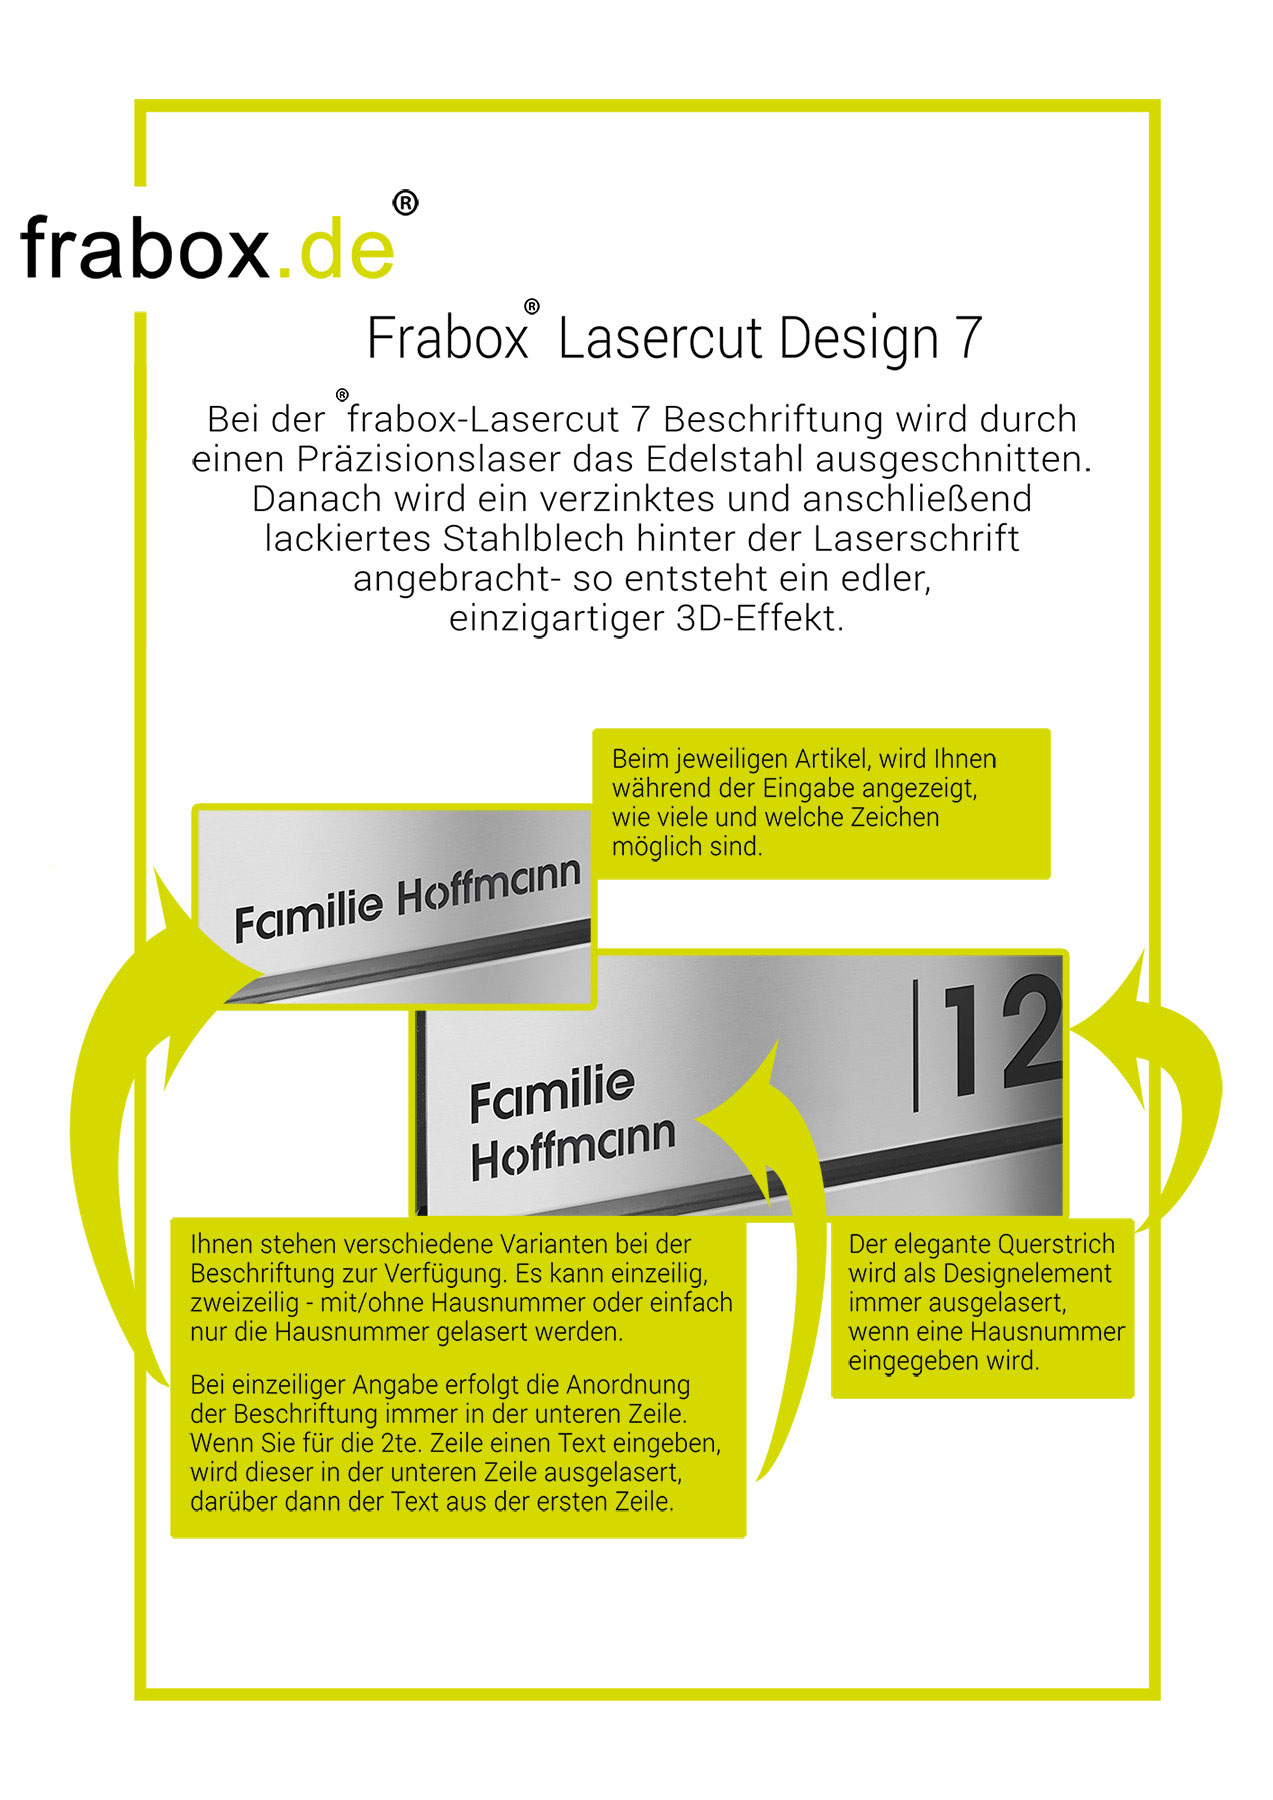 Lasercut-Design-7-Frabox-EdelstahlX2lSokexiMLQH